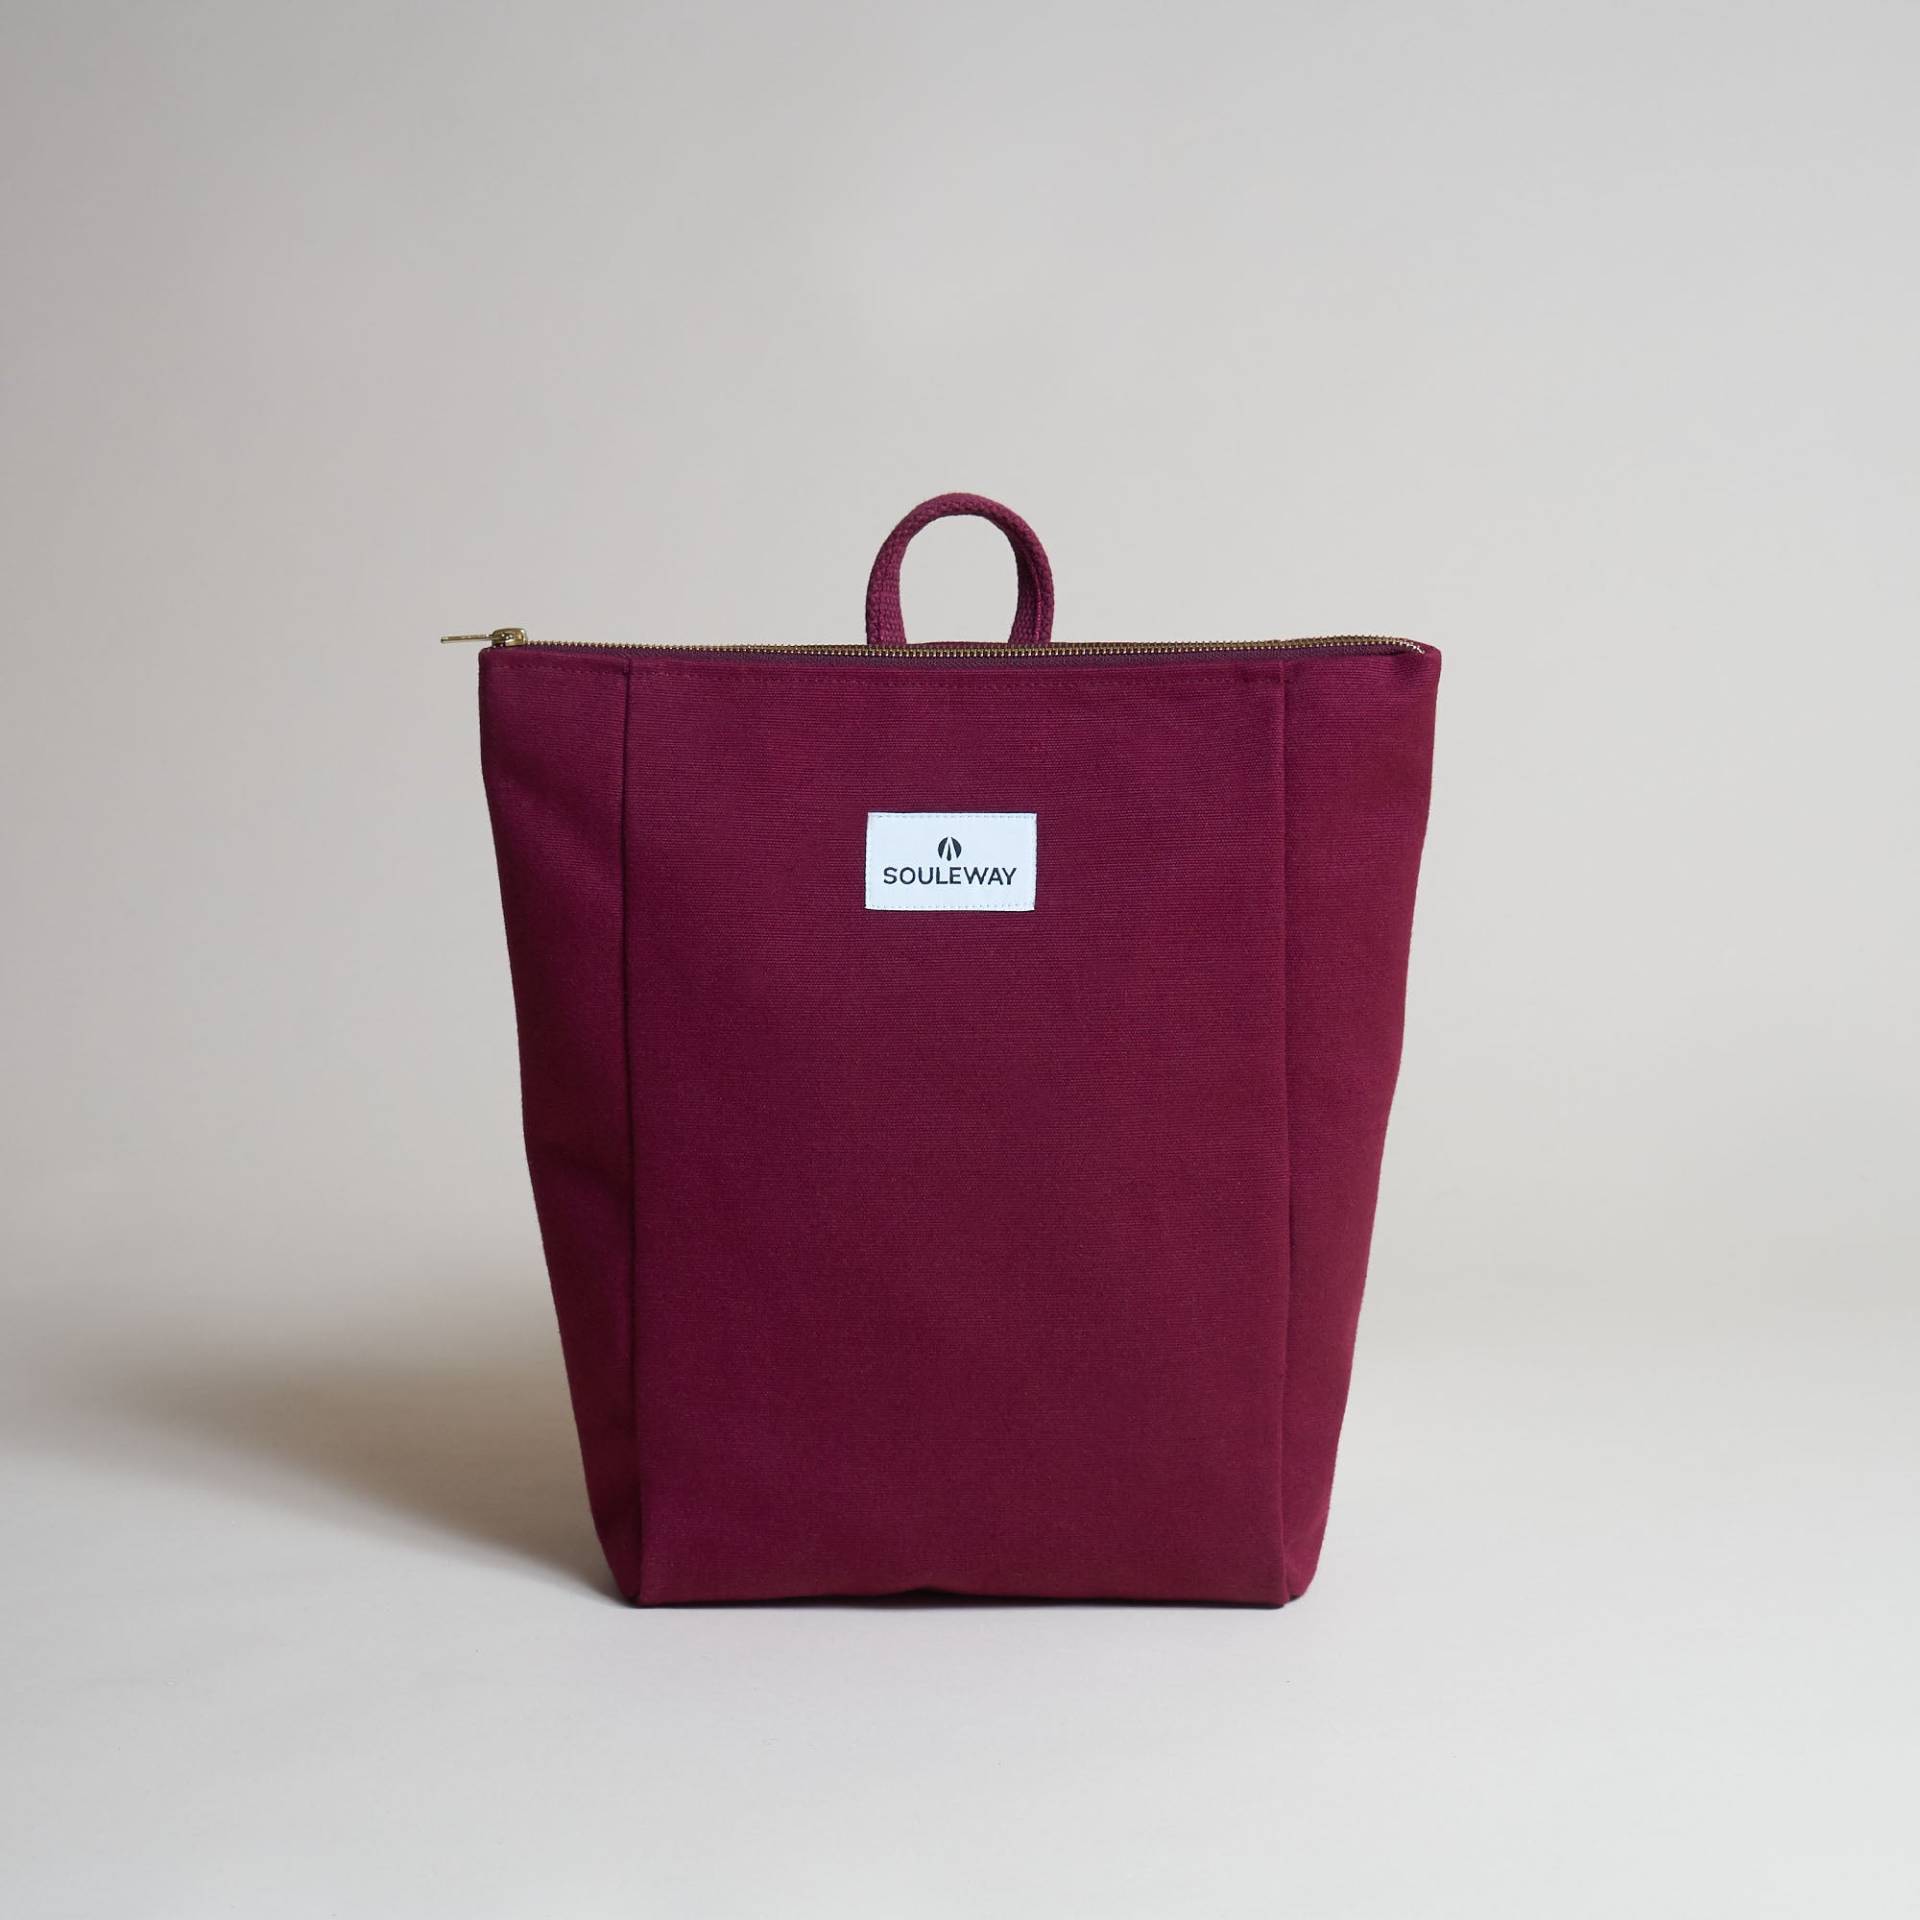 SOULEWAY - Simple Backpack S, Rucksack, 9 Liter Volumen, Laptopfach 13 Zoll, Made in Germany, Handgepäck, vegan, wasserabweisend, Bordeaux Red von Souleway